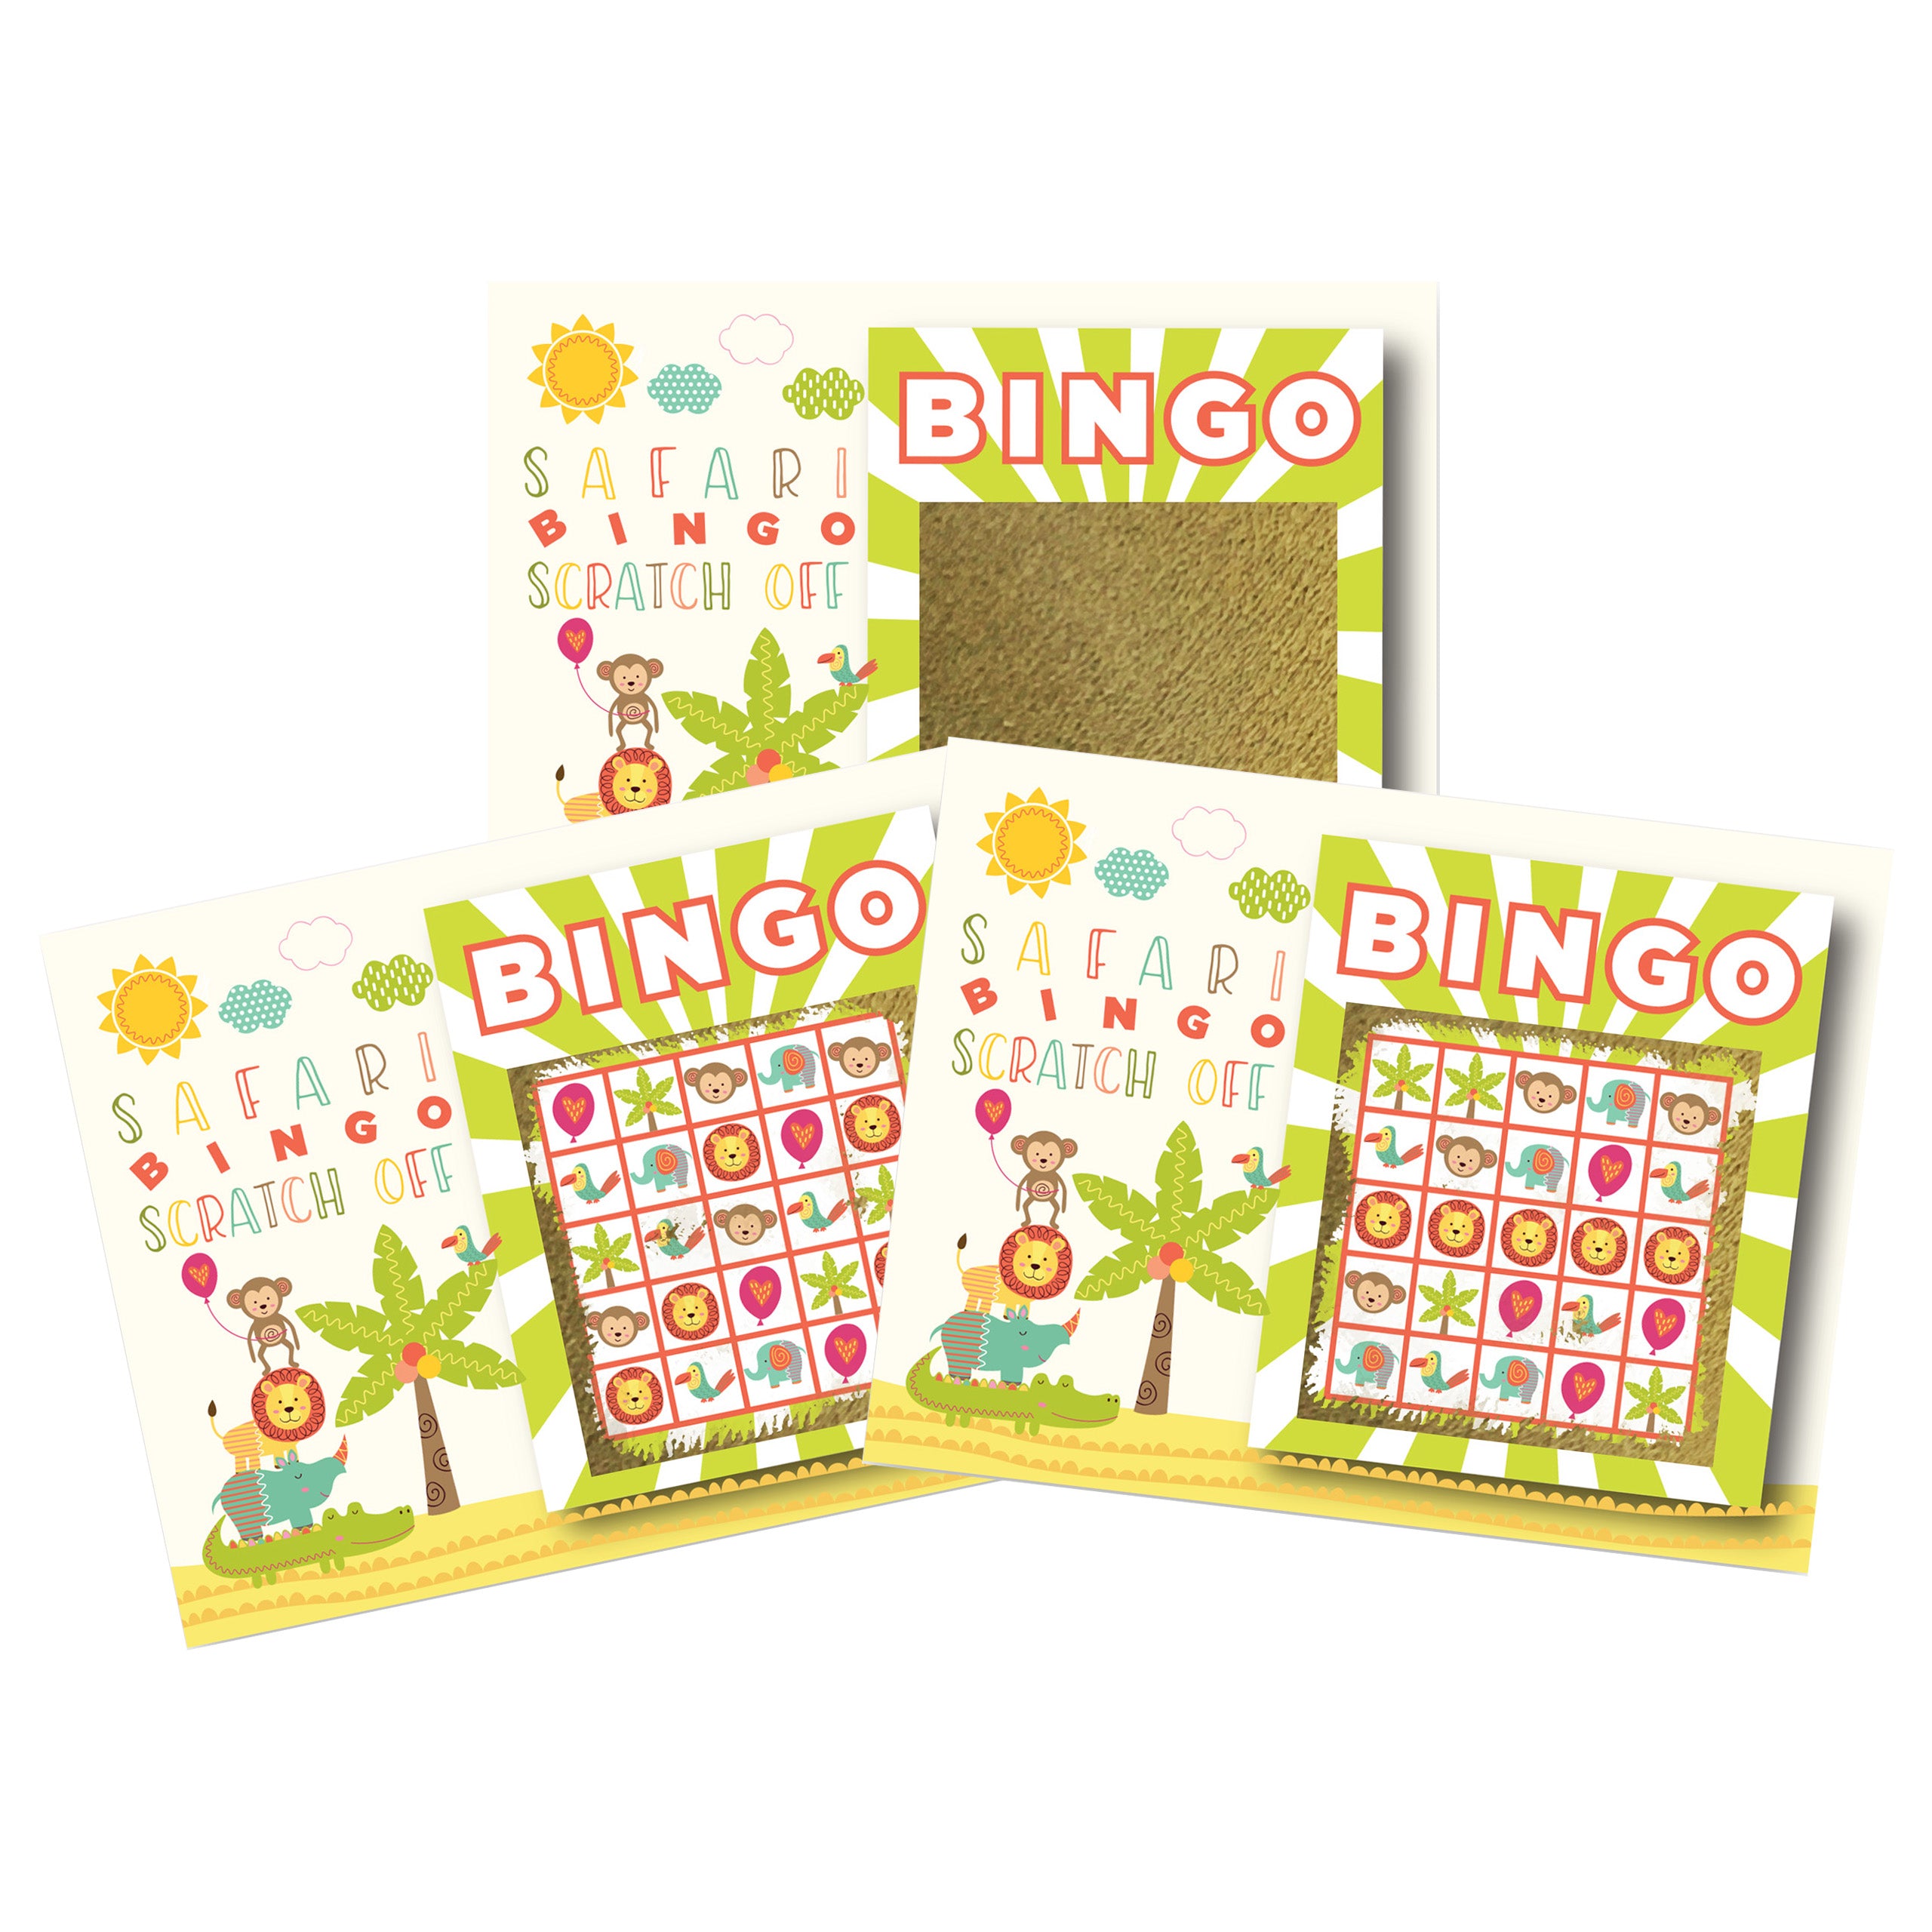 Baby Shower Safari BINGO Scratch Off Game 26 Pack - 2 Bingo and 24 Non-Bingo Cards - My Scratch Offs